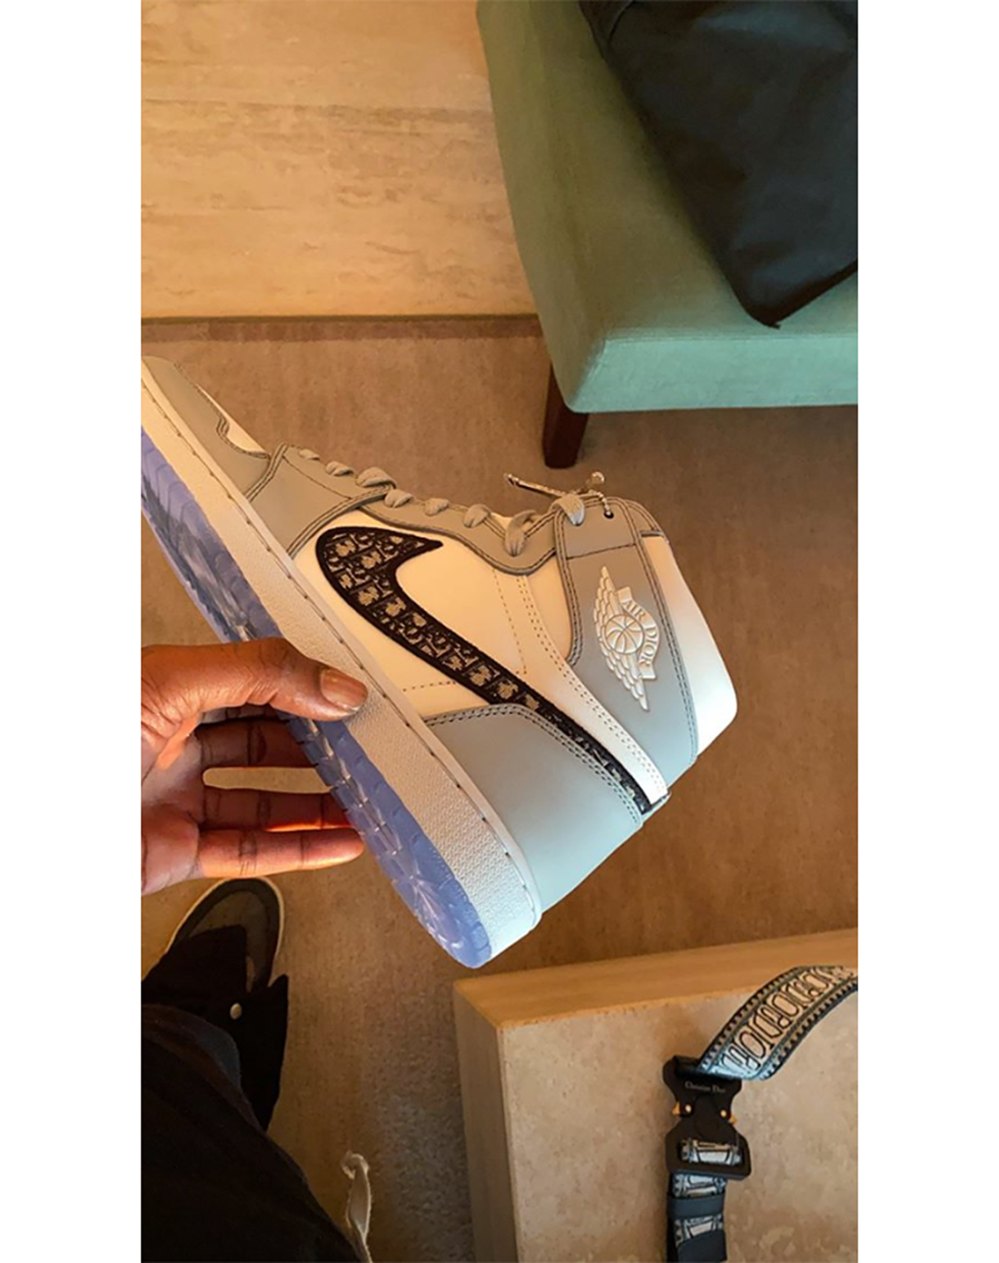 Opinion: Dior x Nike Air Jordan 1 sneakers, loved by Kylie Jenner